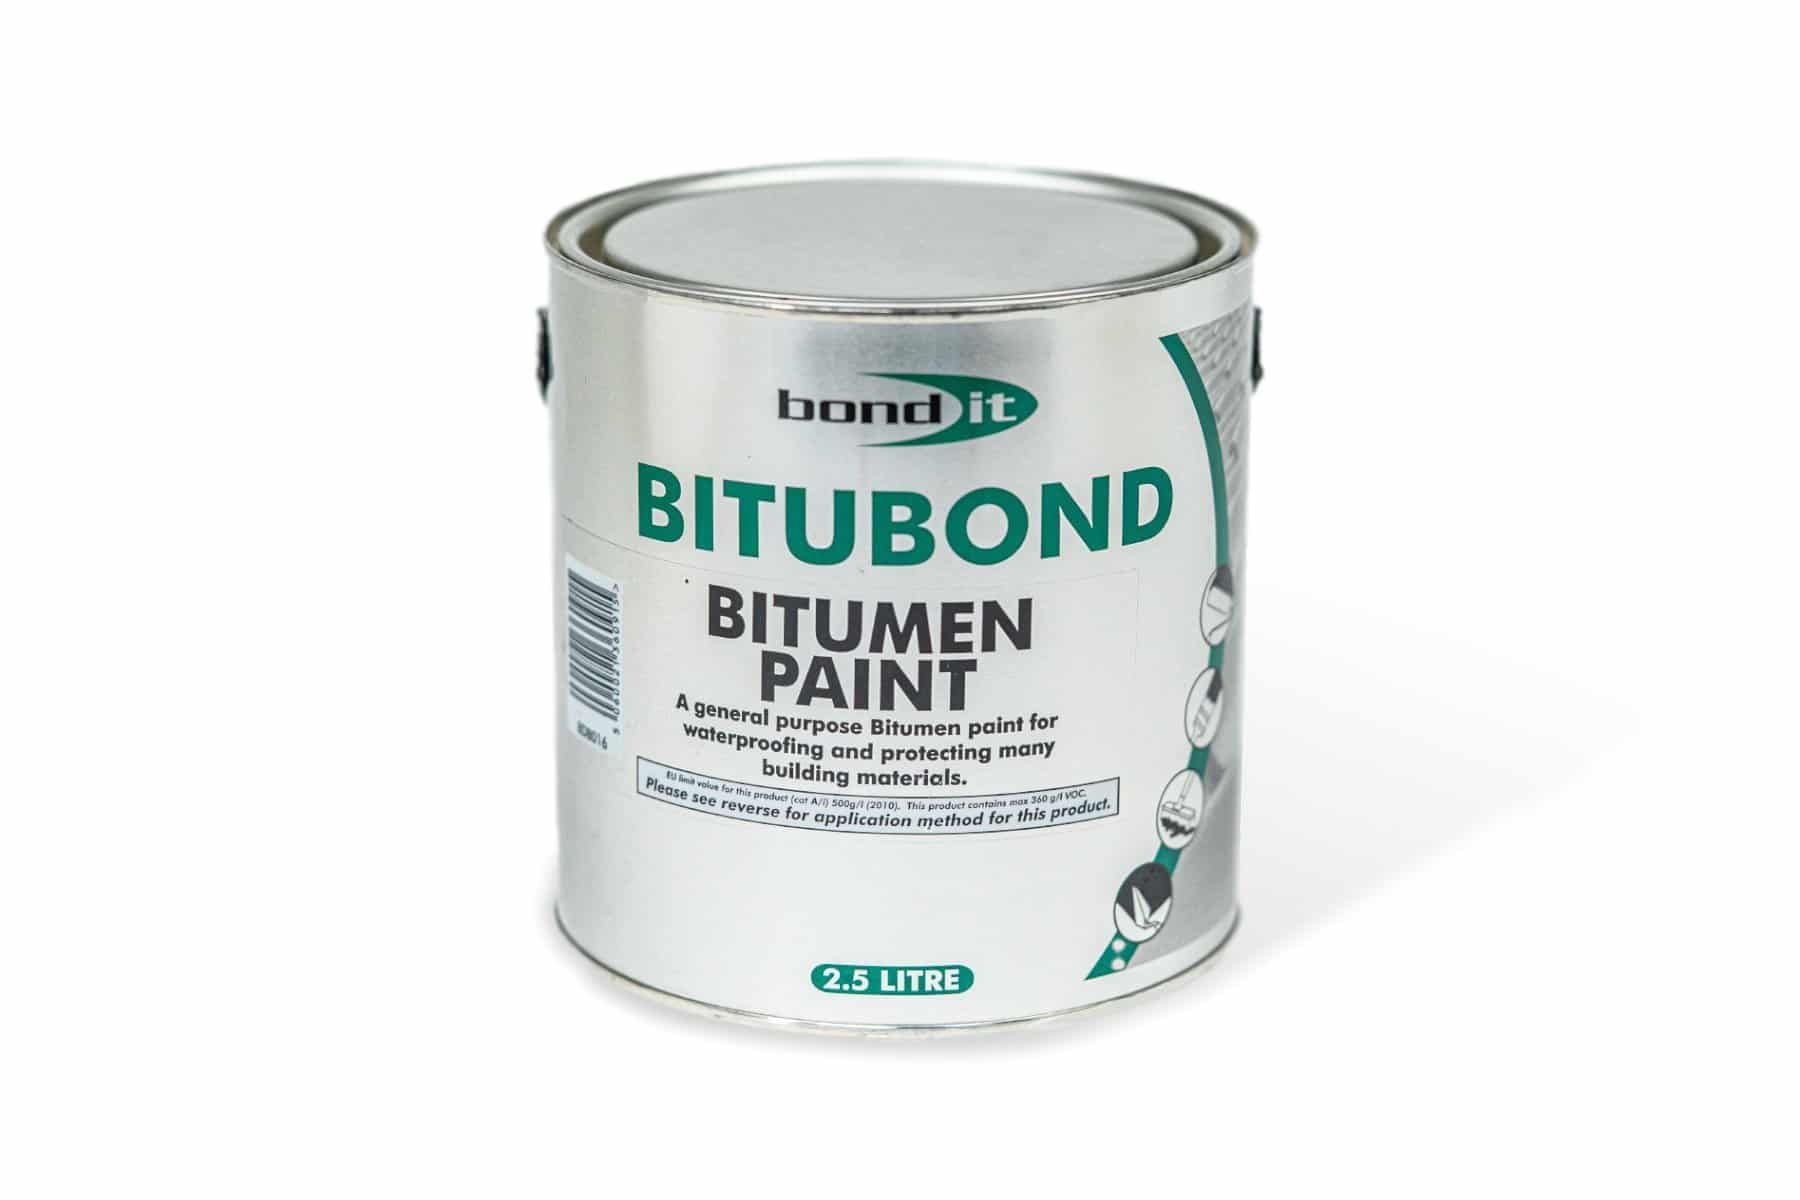 Bitubond Bitumen Paint